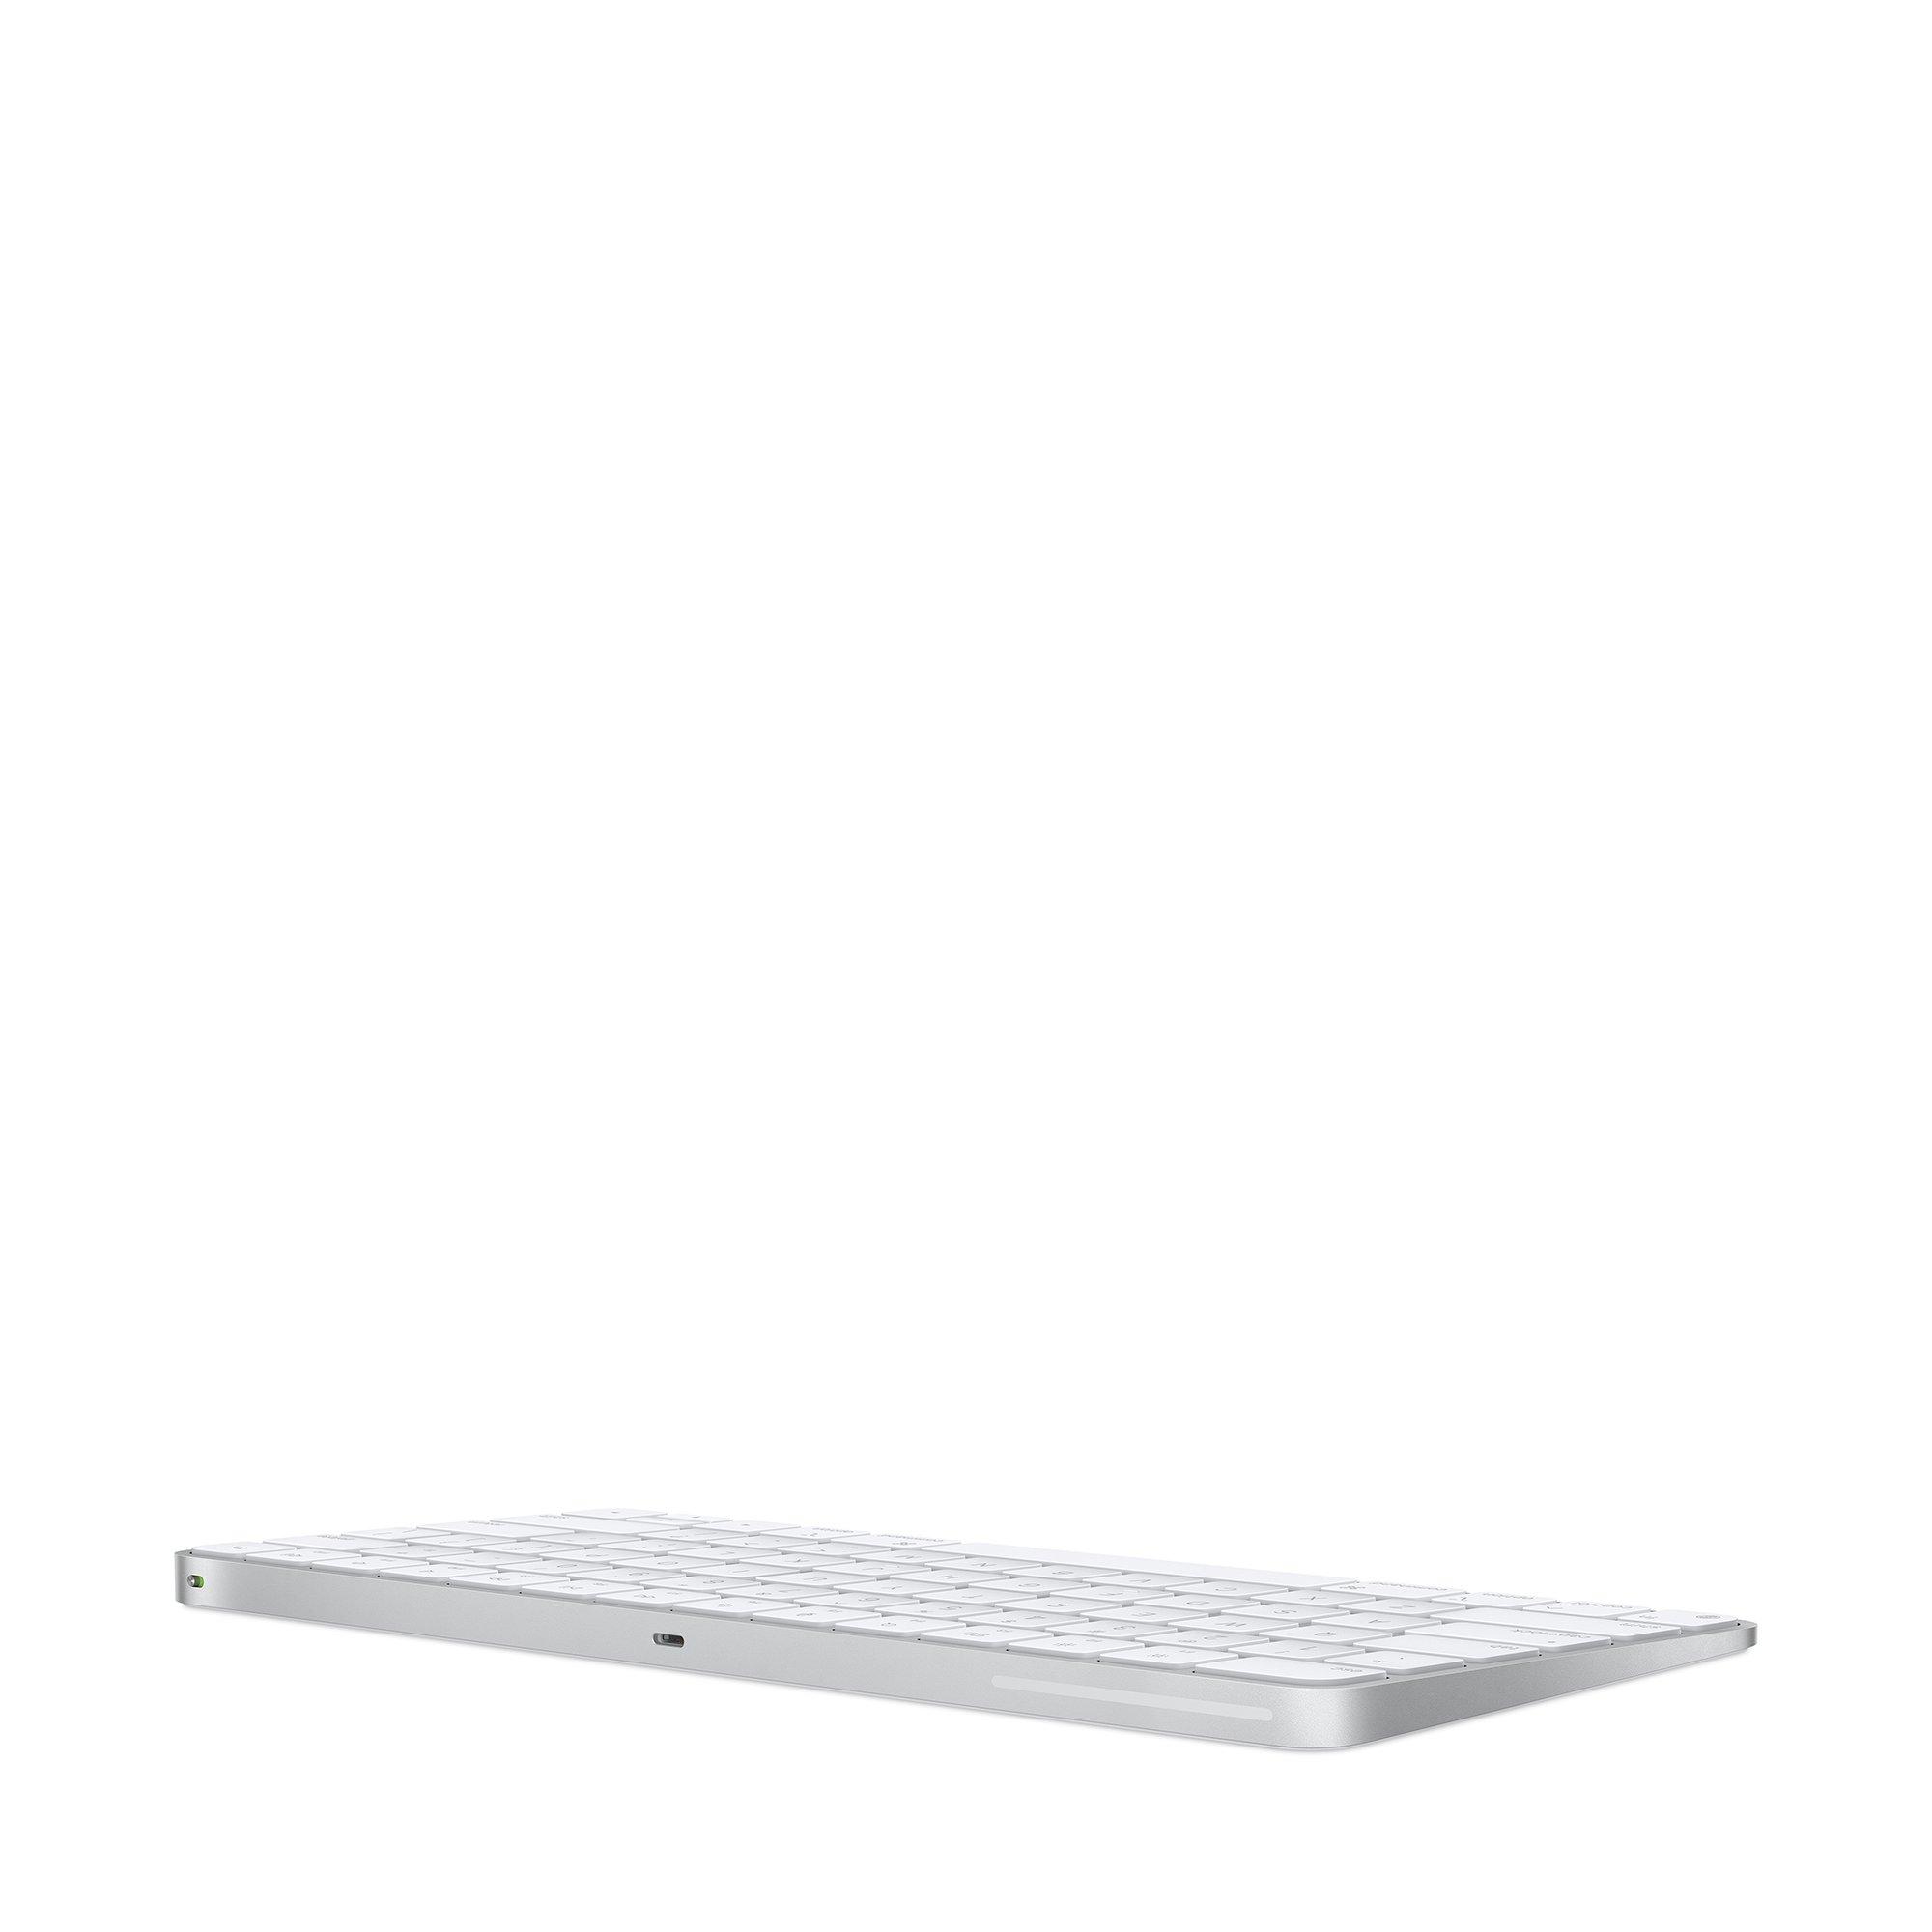 Apple Magic Keyboard (CH-Layout) Kabellose Tastatur 